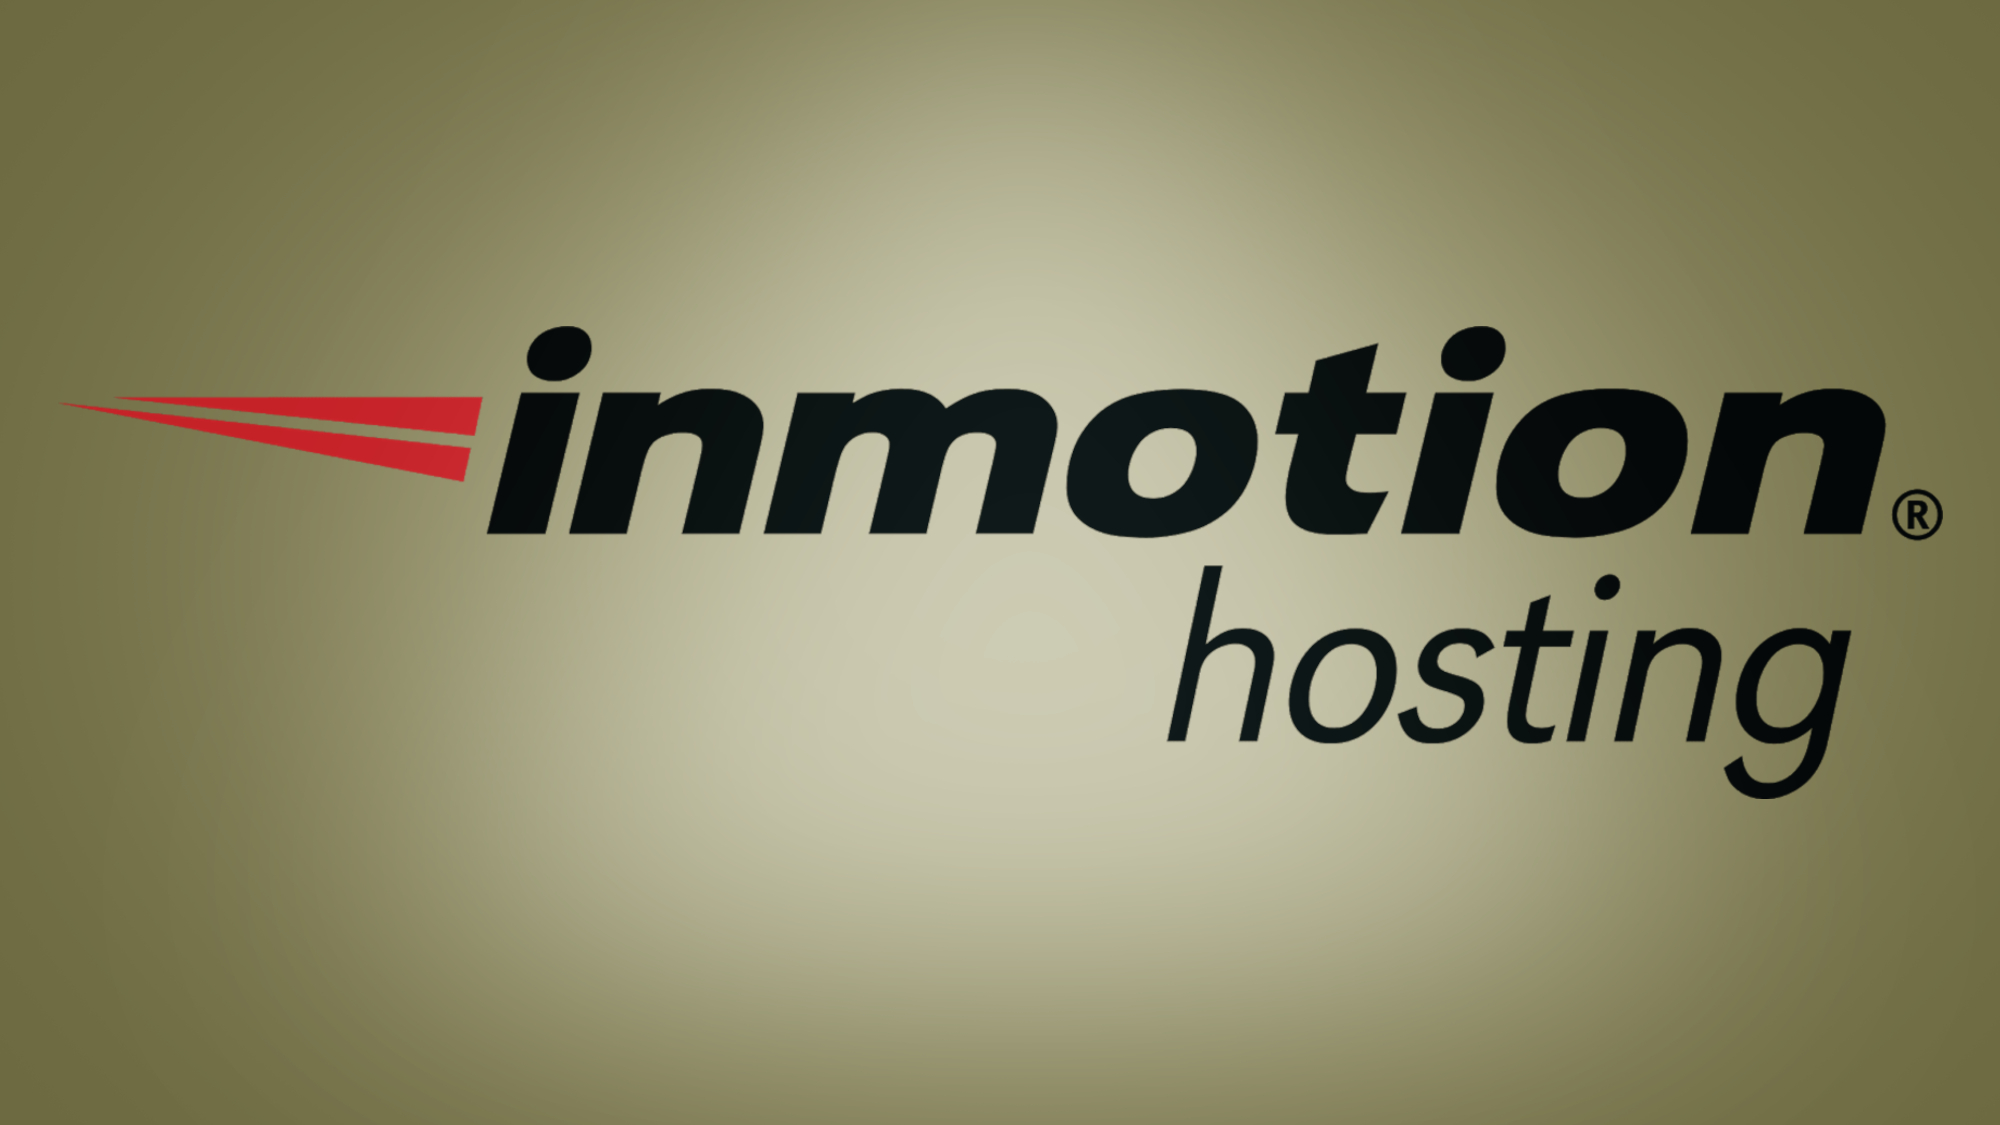 InMotion Hosting logo in black on khaki background